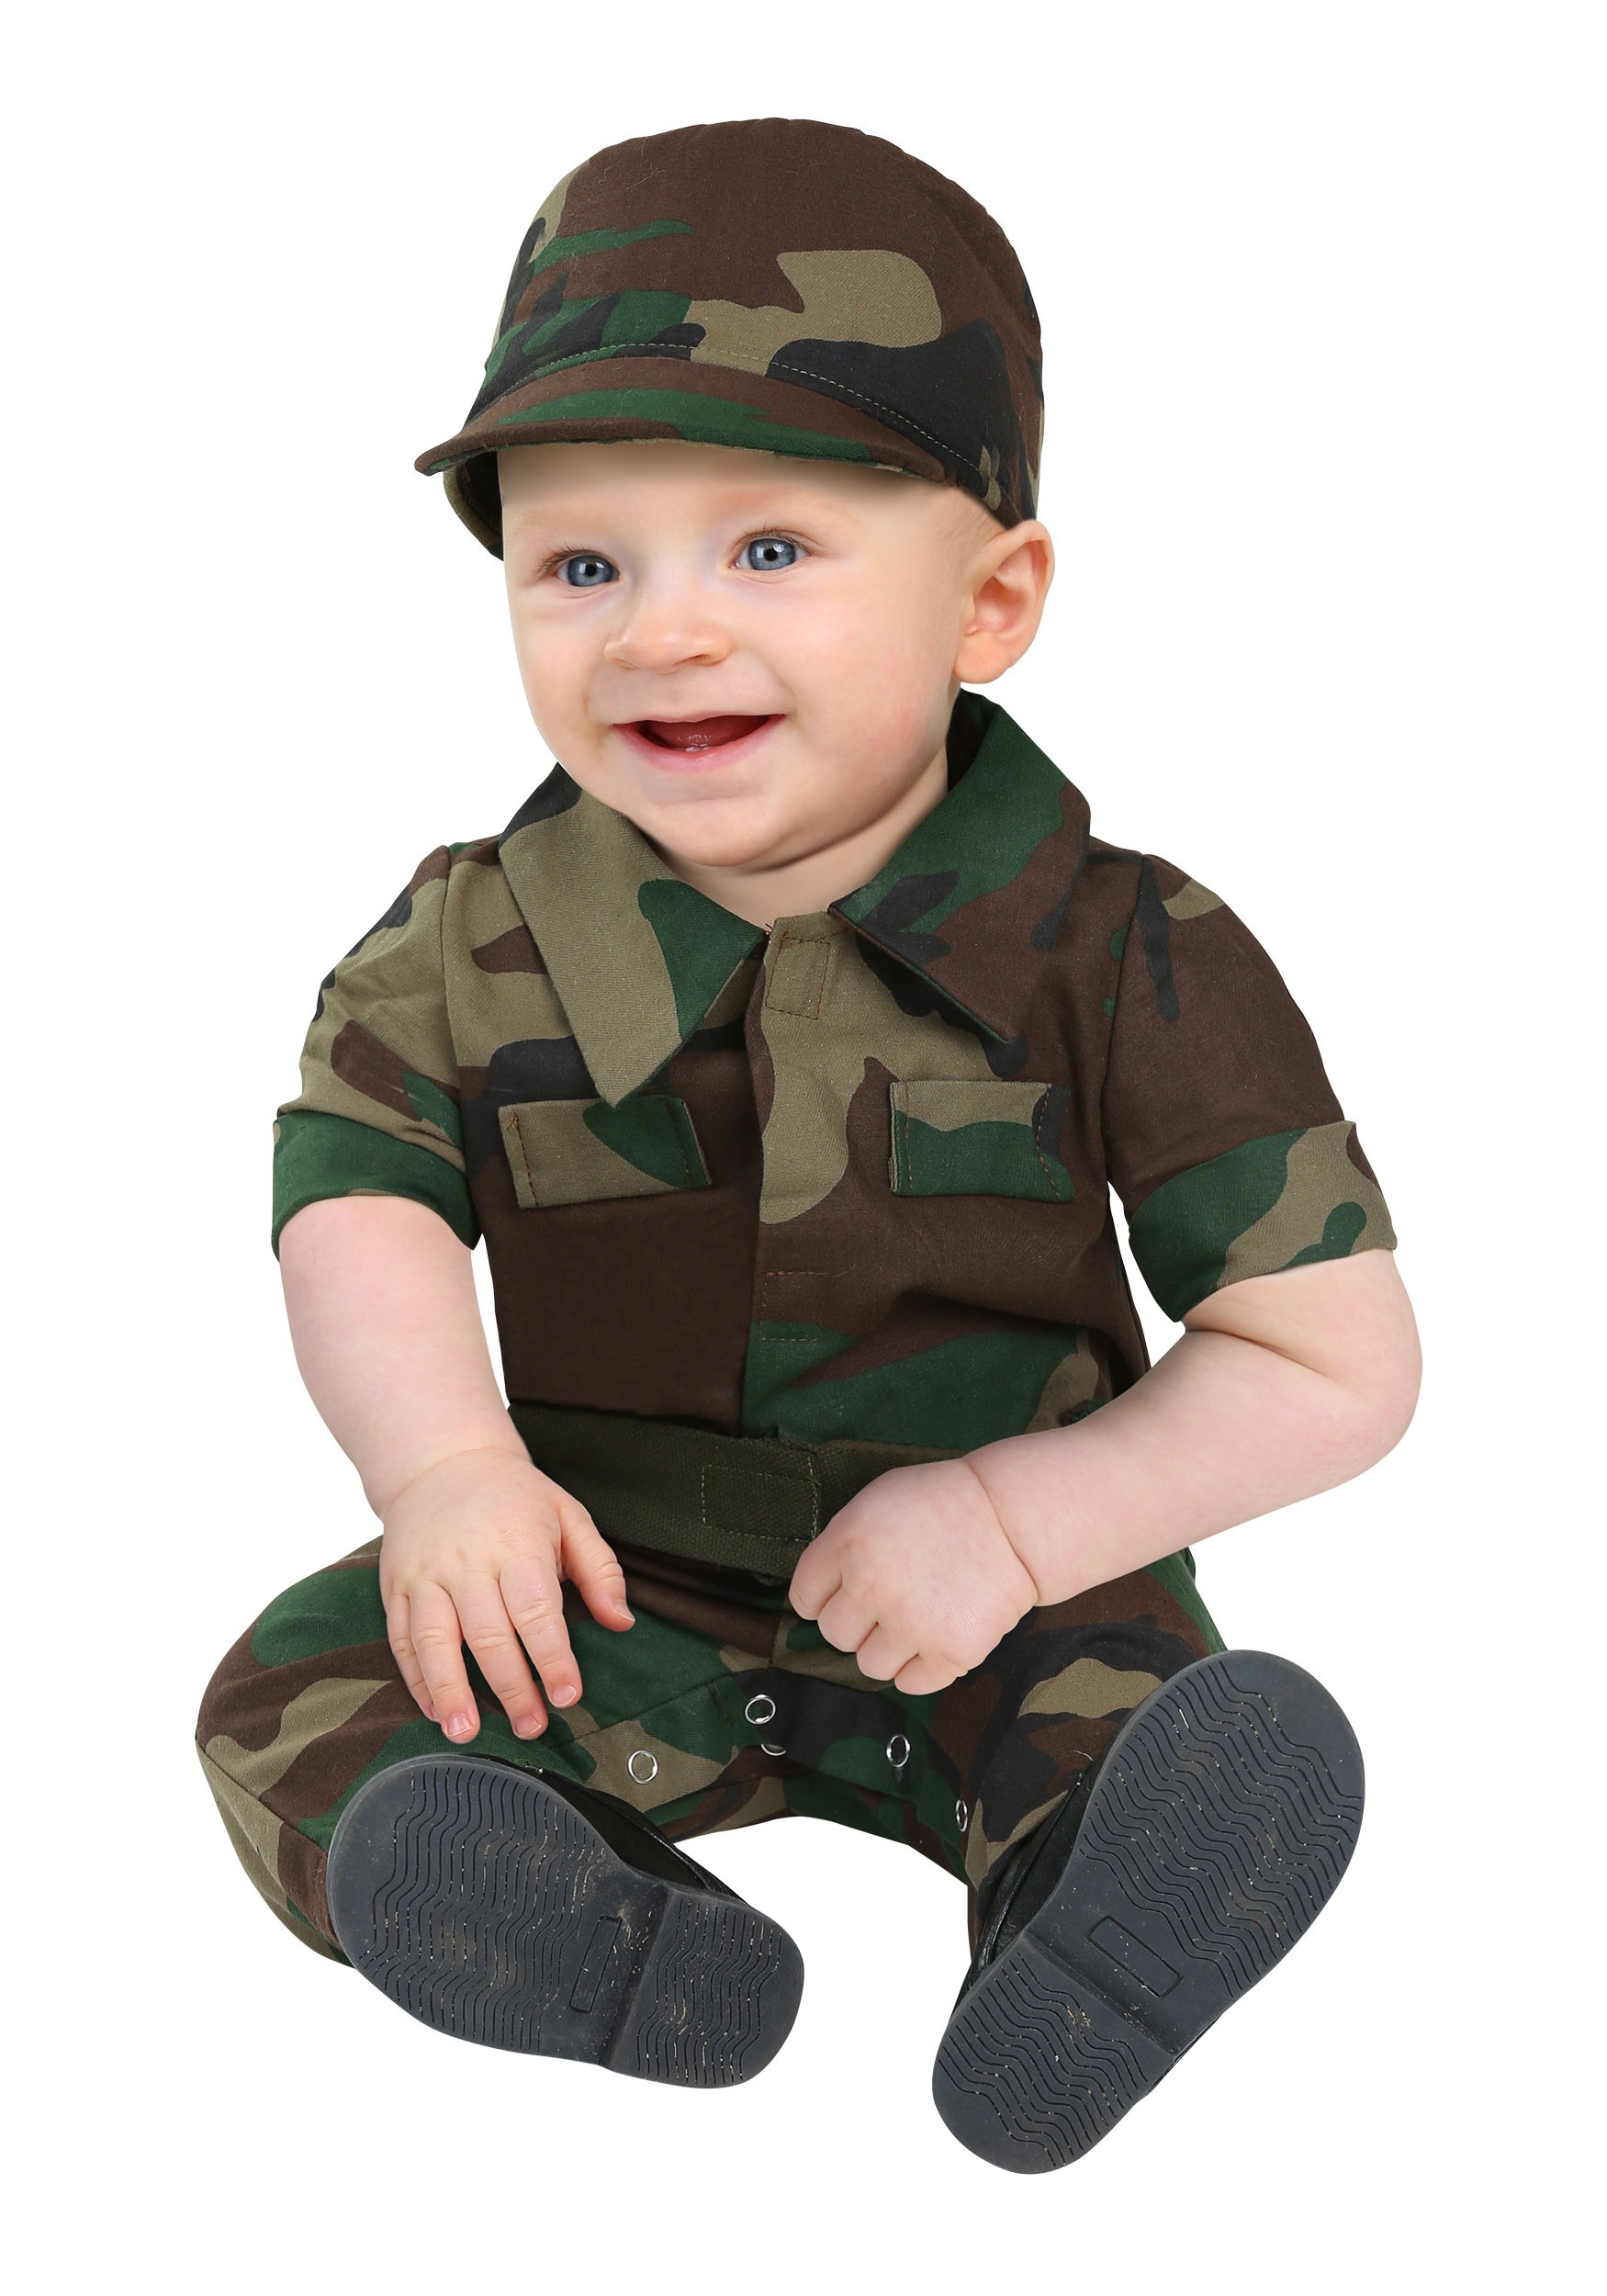 Disfraz militar infantil